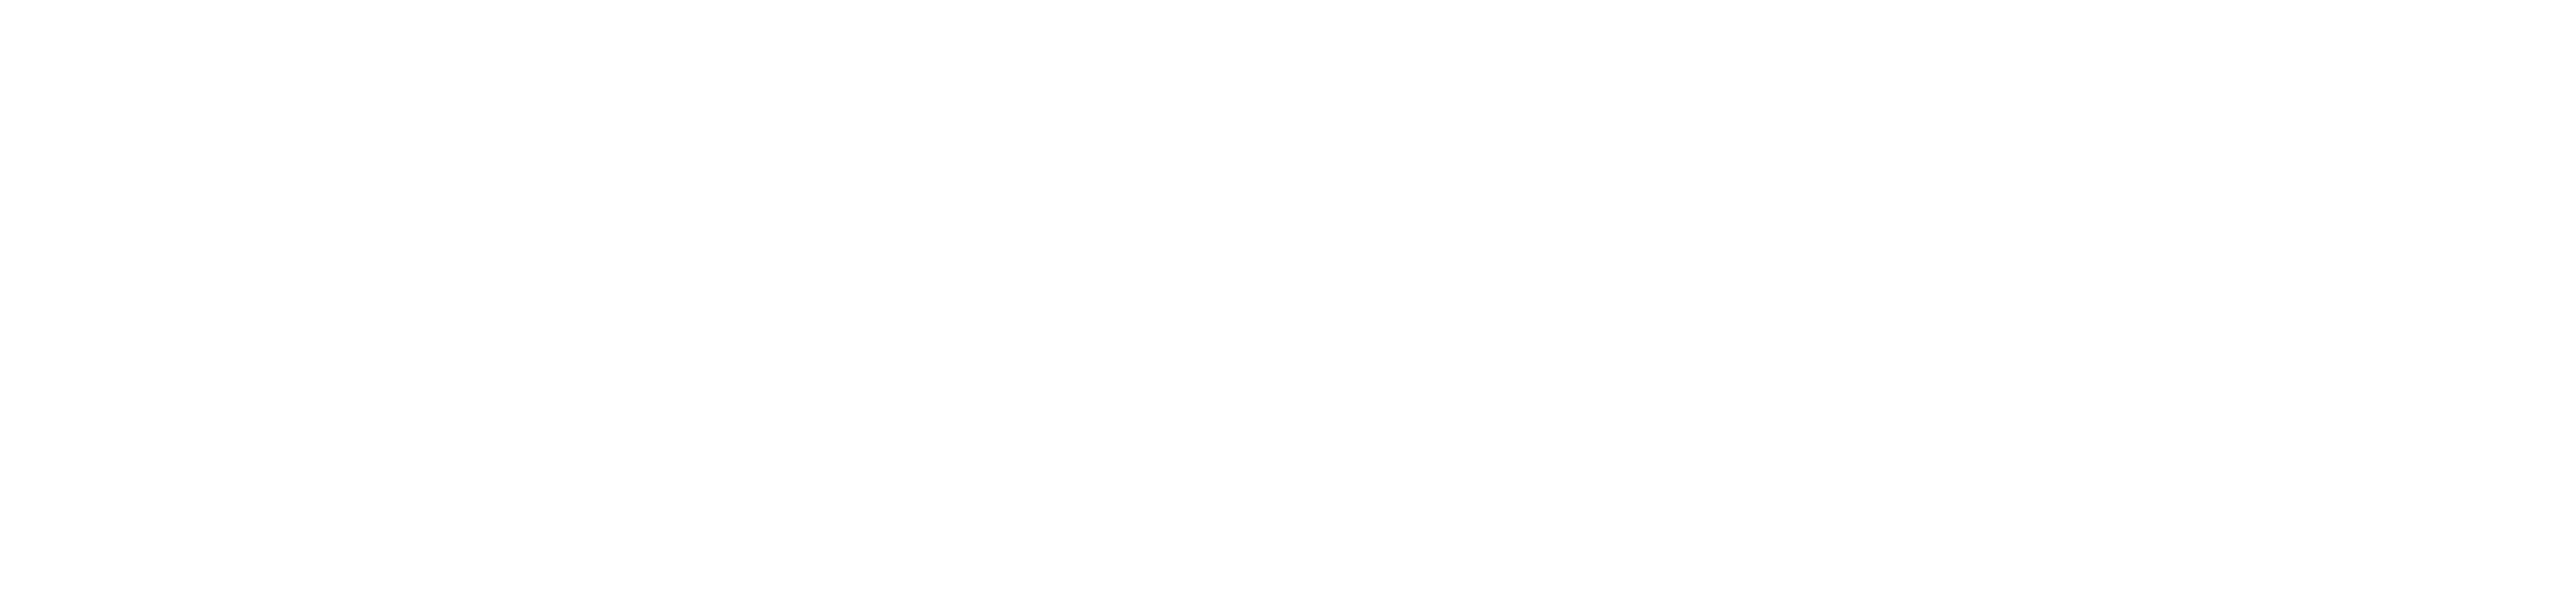 Sound Wave Logo Design